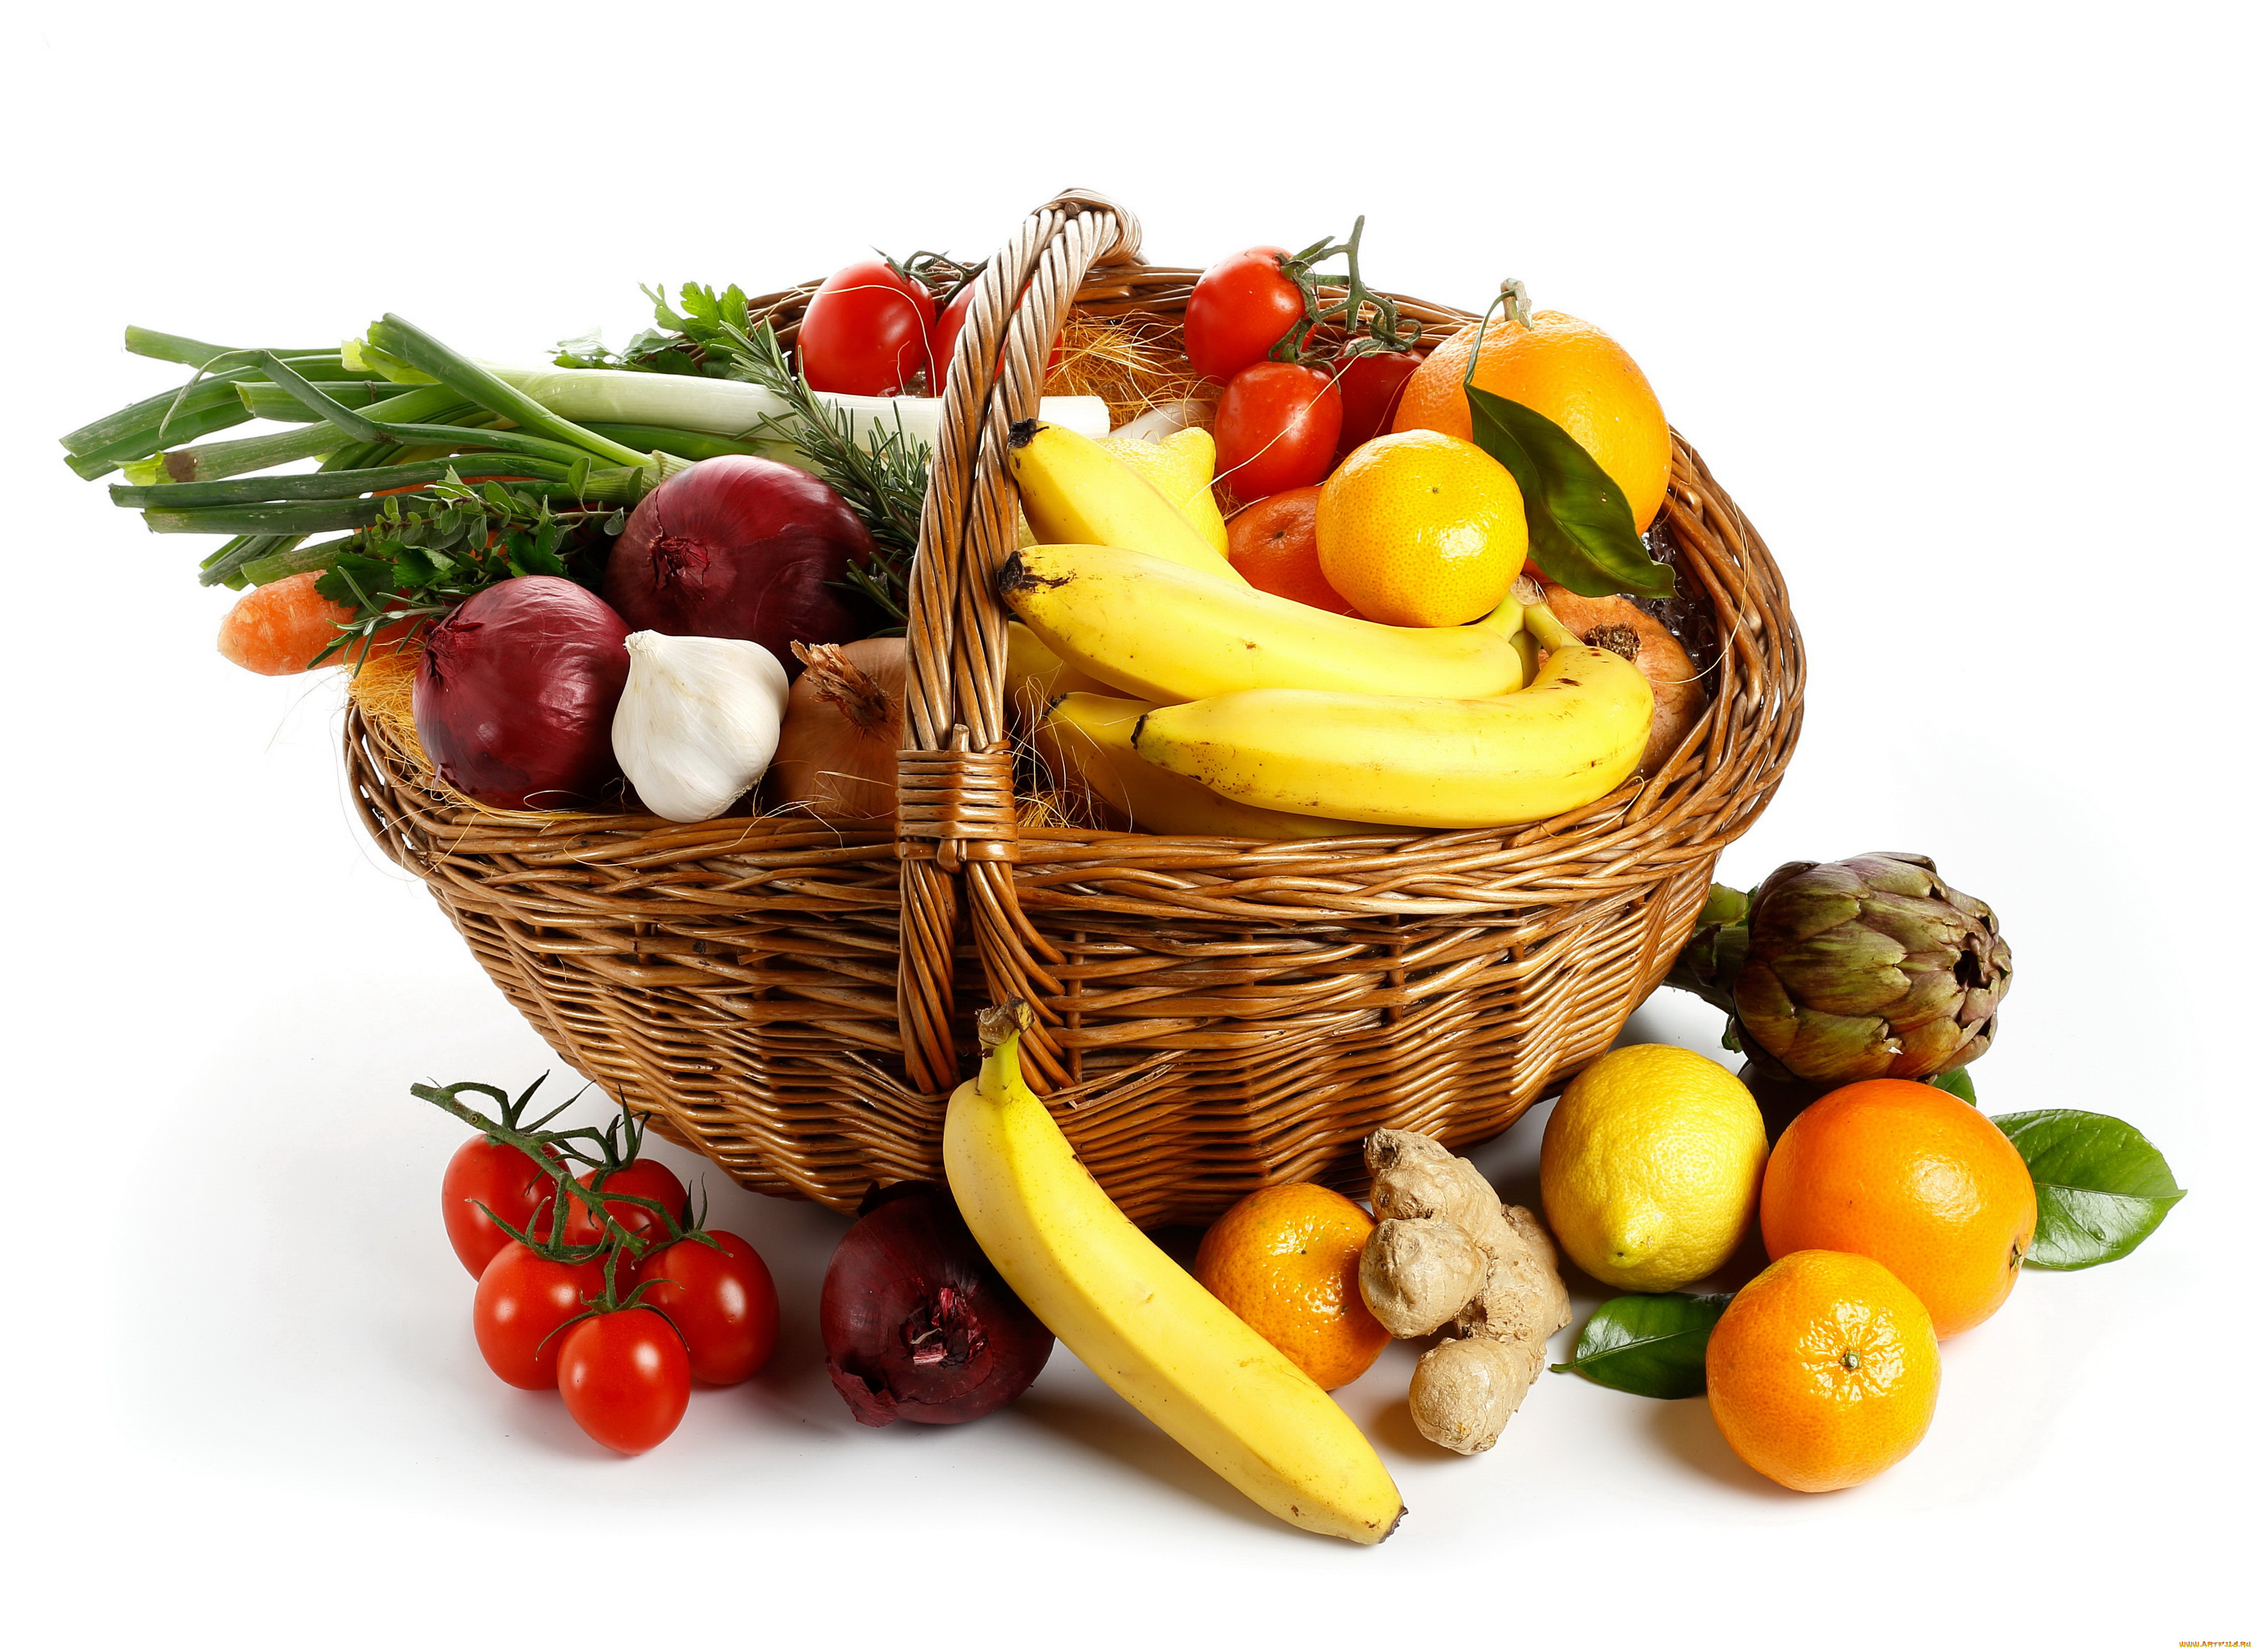 еда, фрукты, и, овощи, вместе, апельсины, помидоры, бананы, фрукты, корзина, овощи, лук, томаты